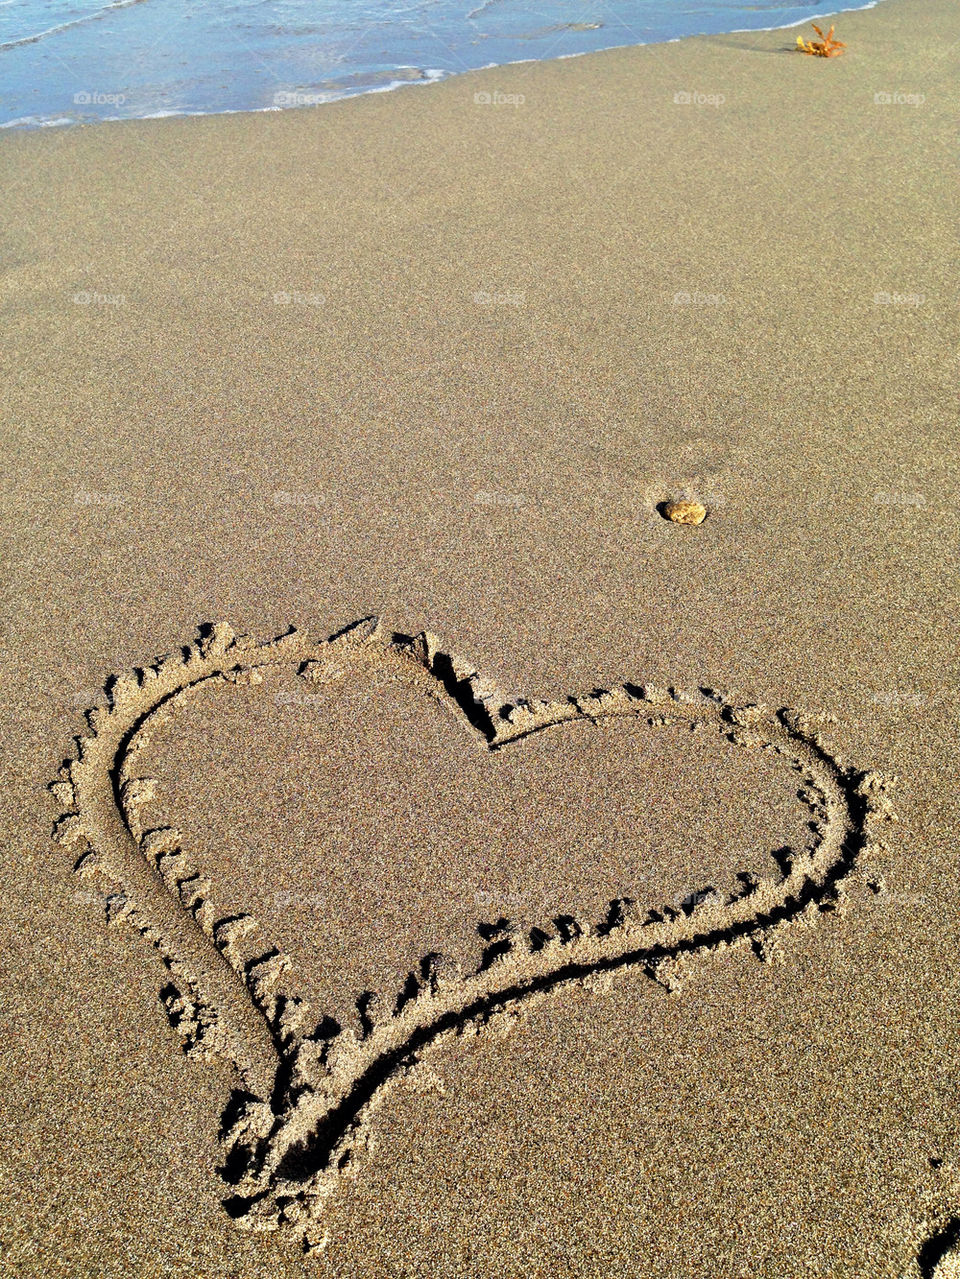 Heart drawn on sand at beach, Florida, USA